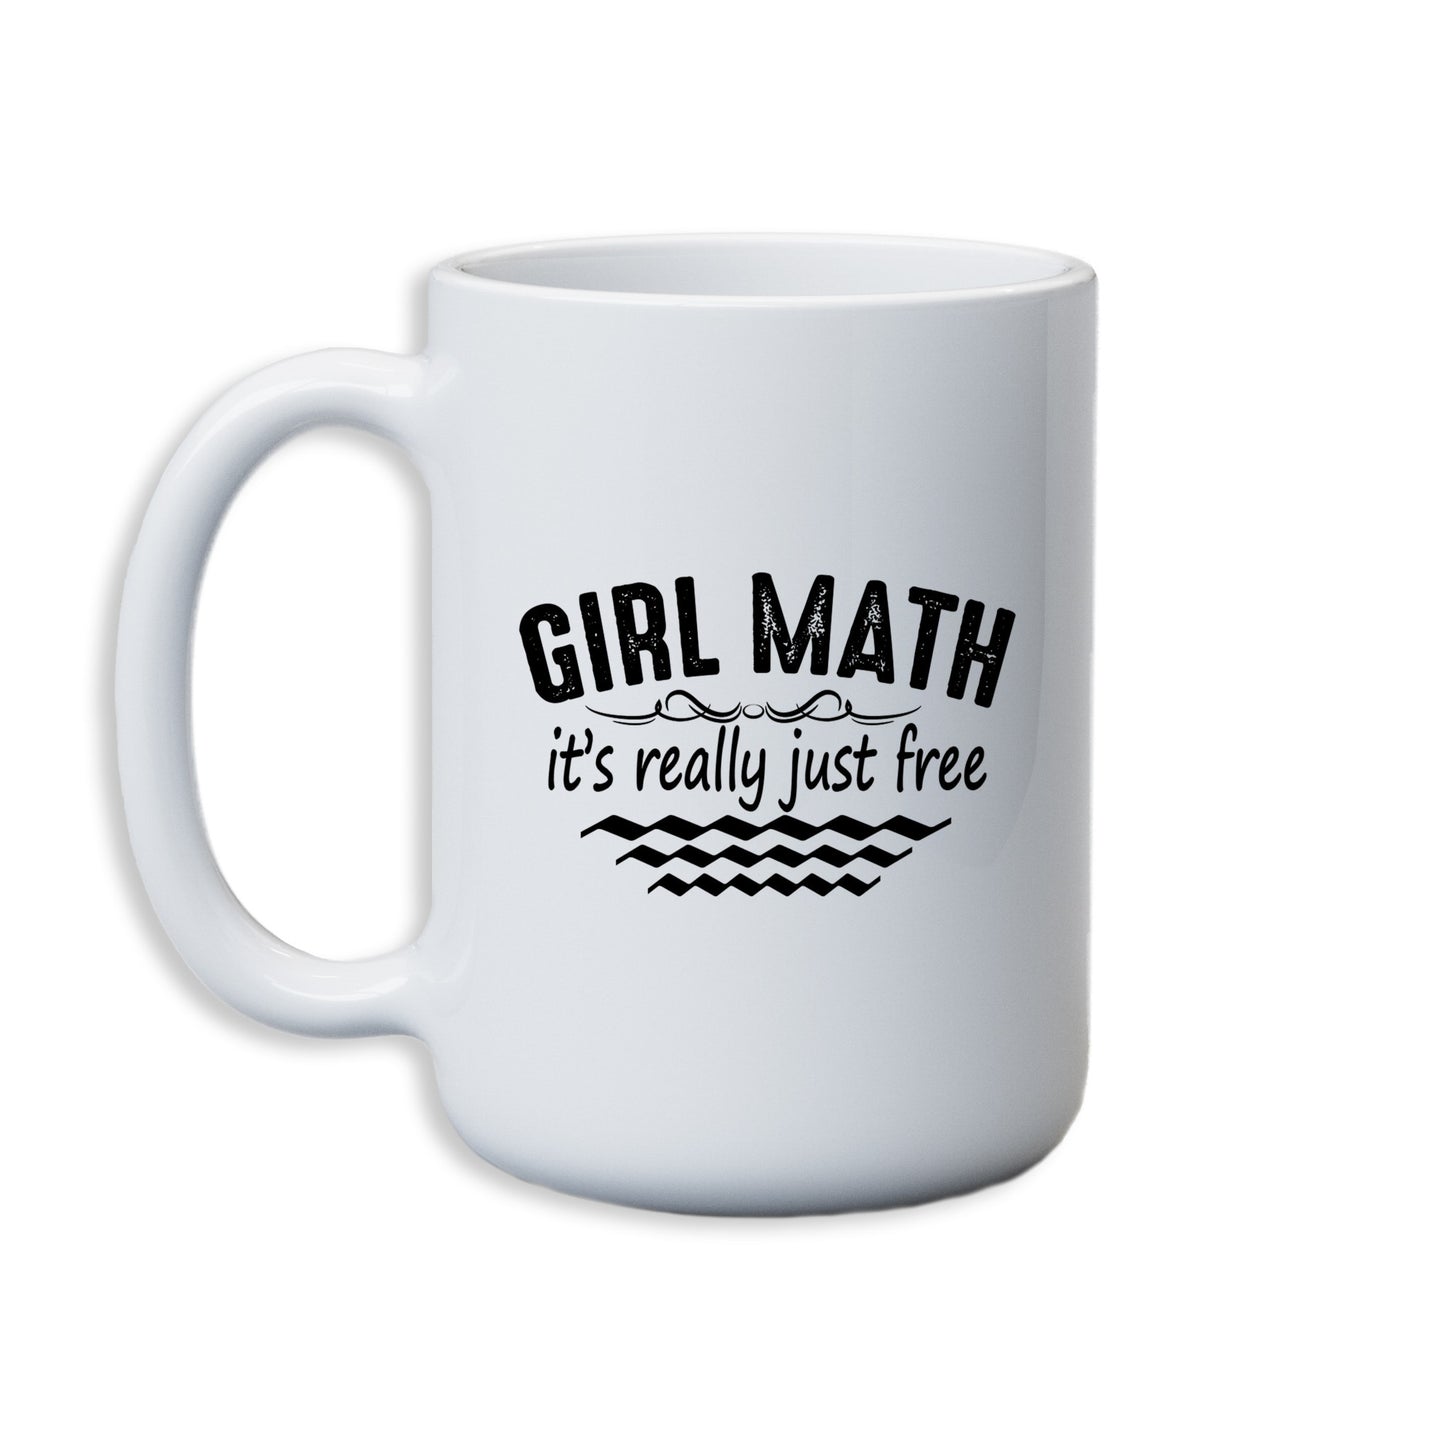 Girl Math it's really just free Mug 15 oz